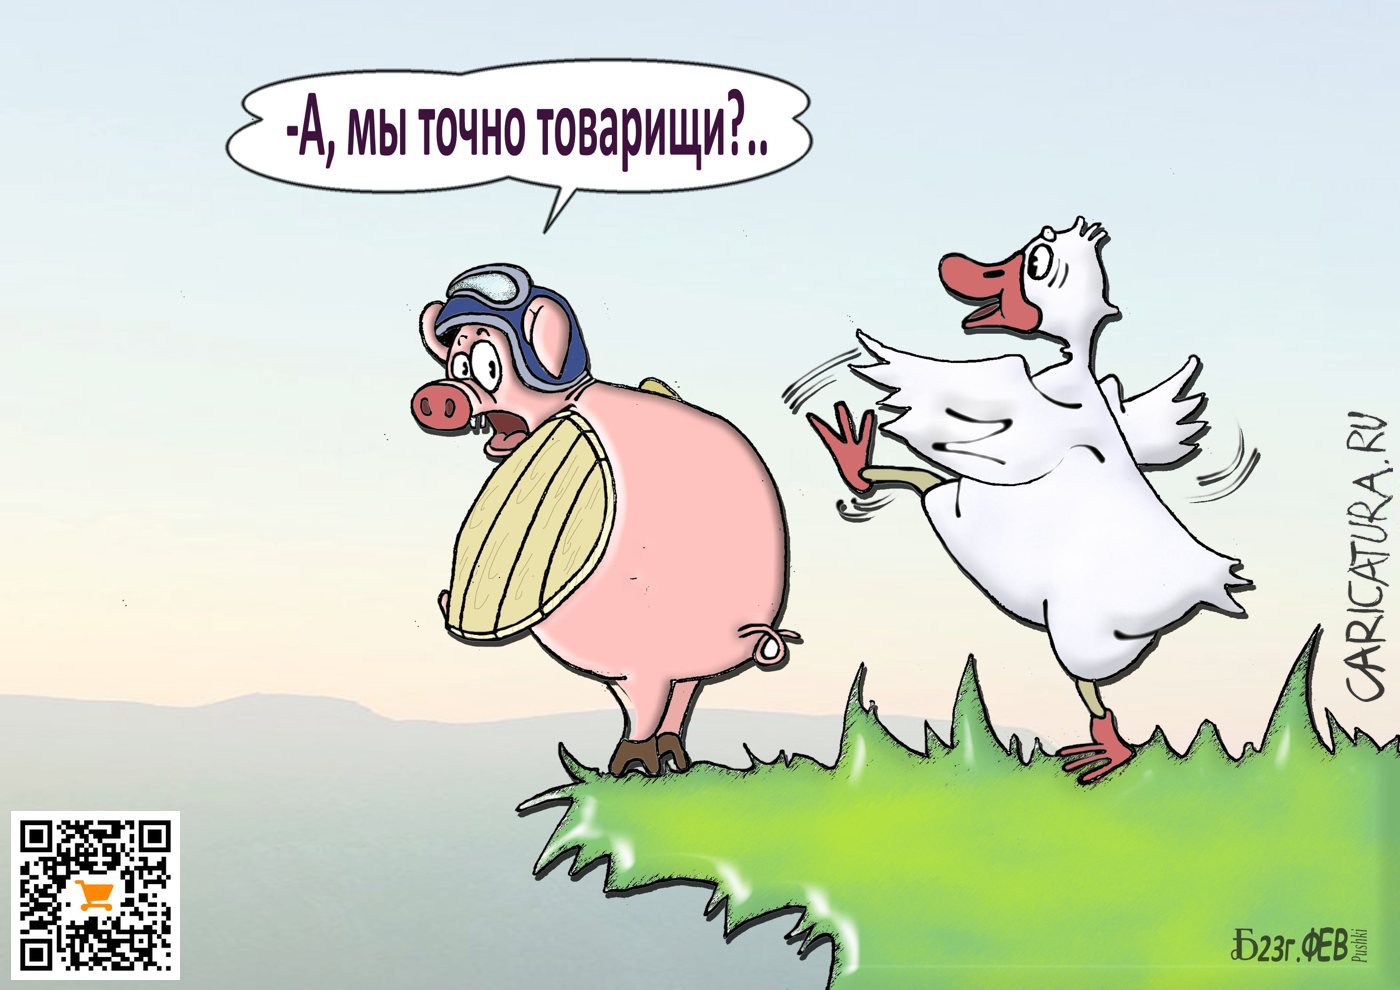 Карикатура "Про свинью и товарища", Борис Демин